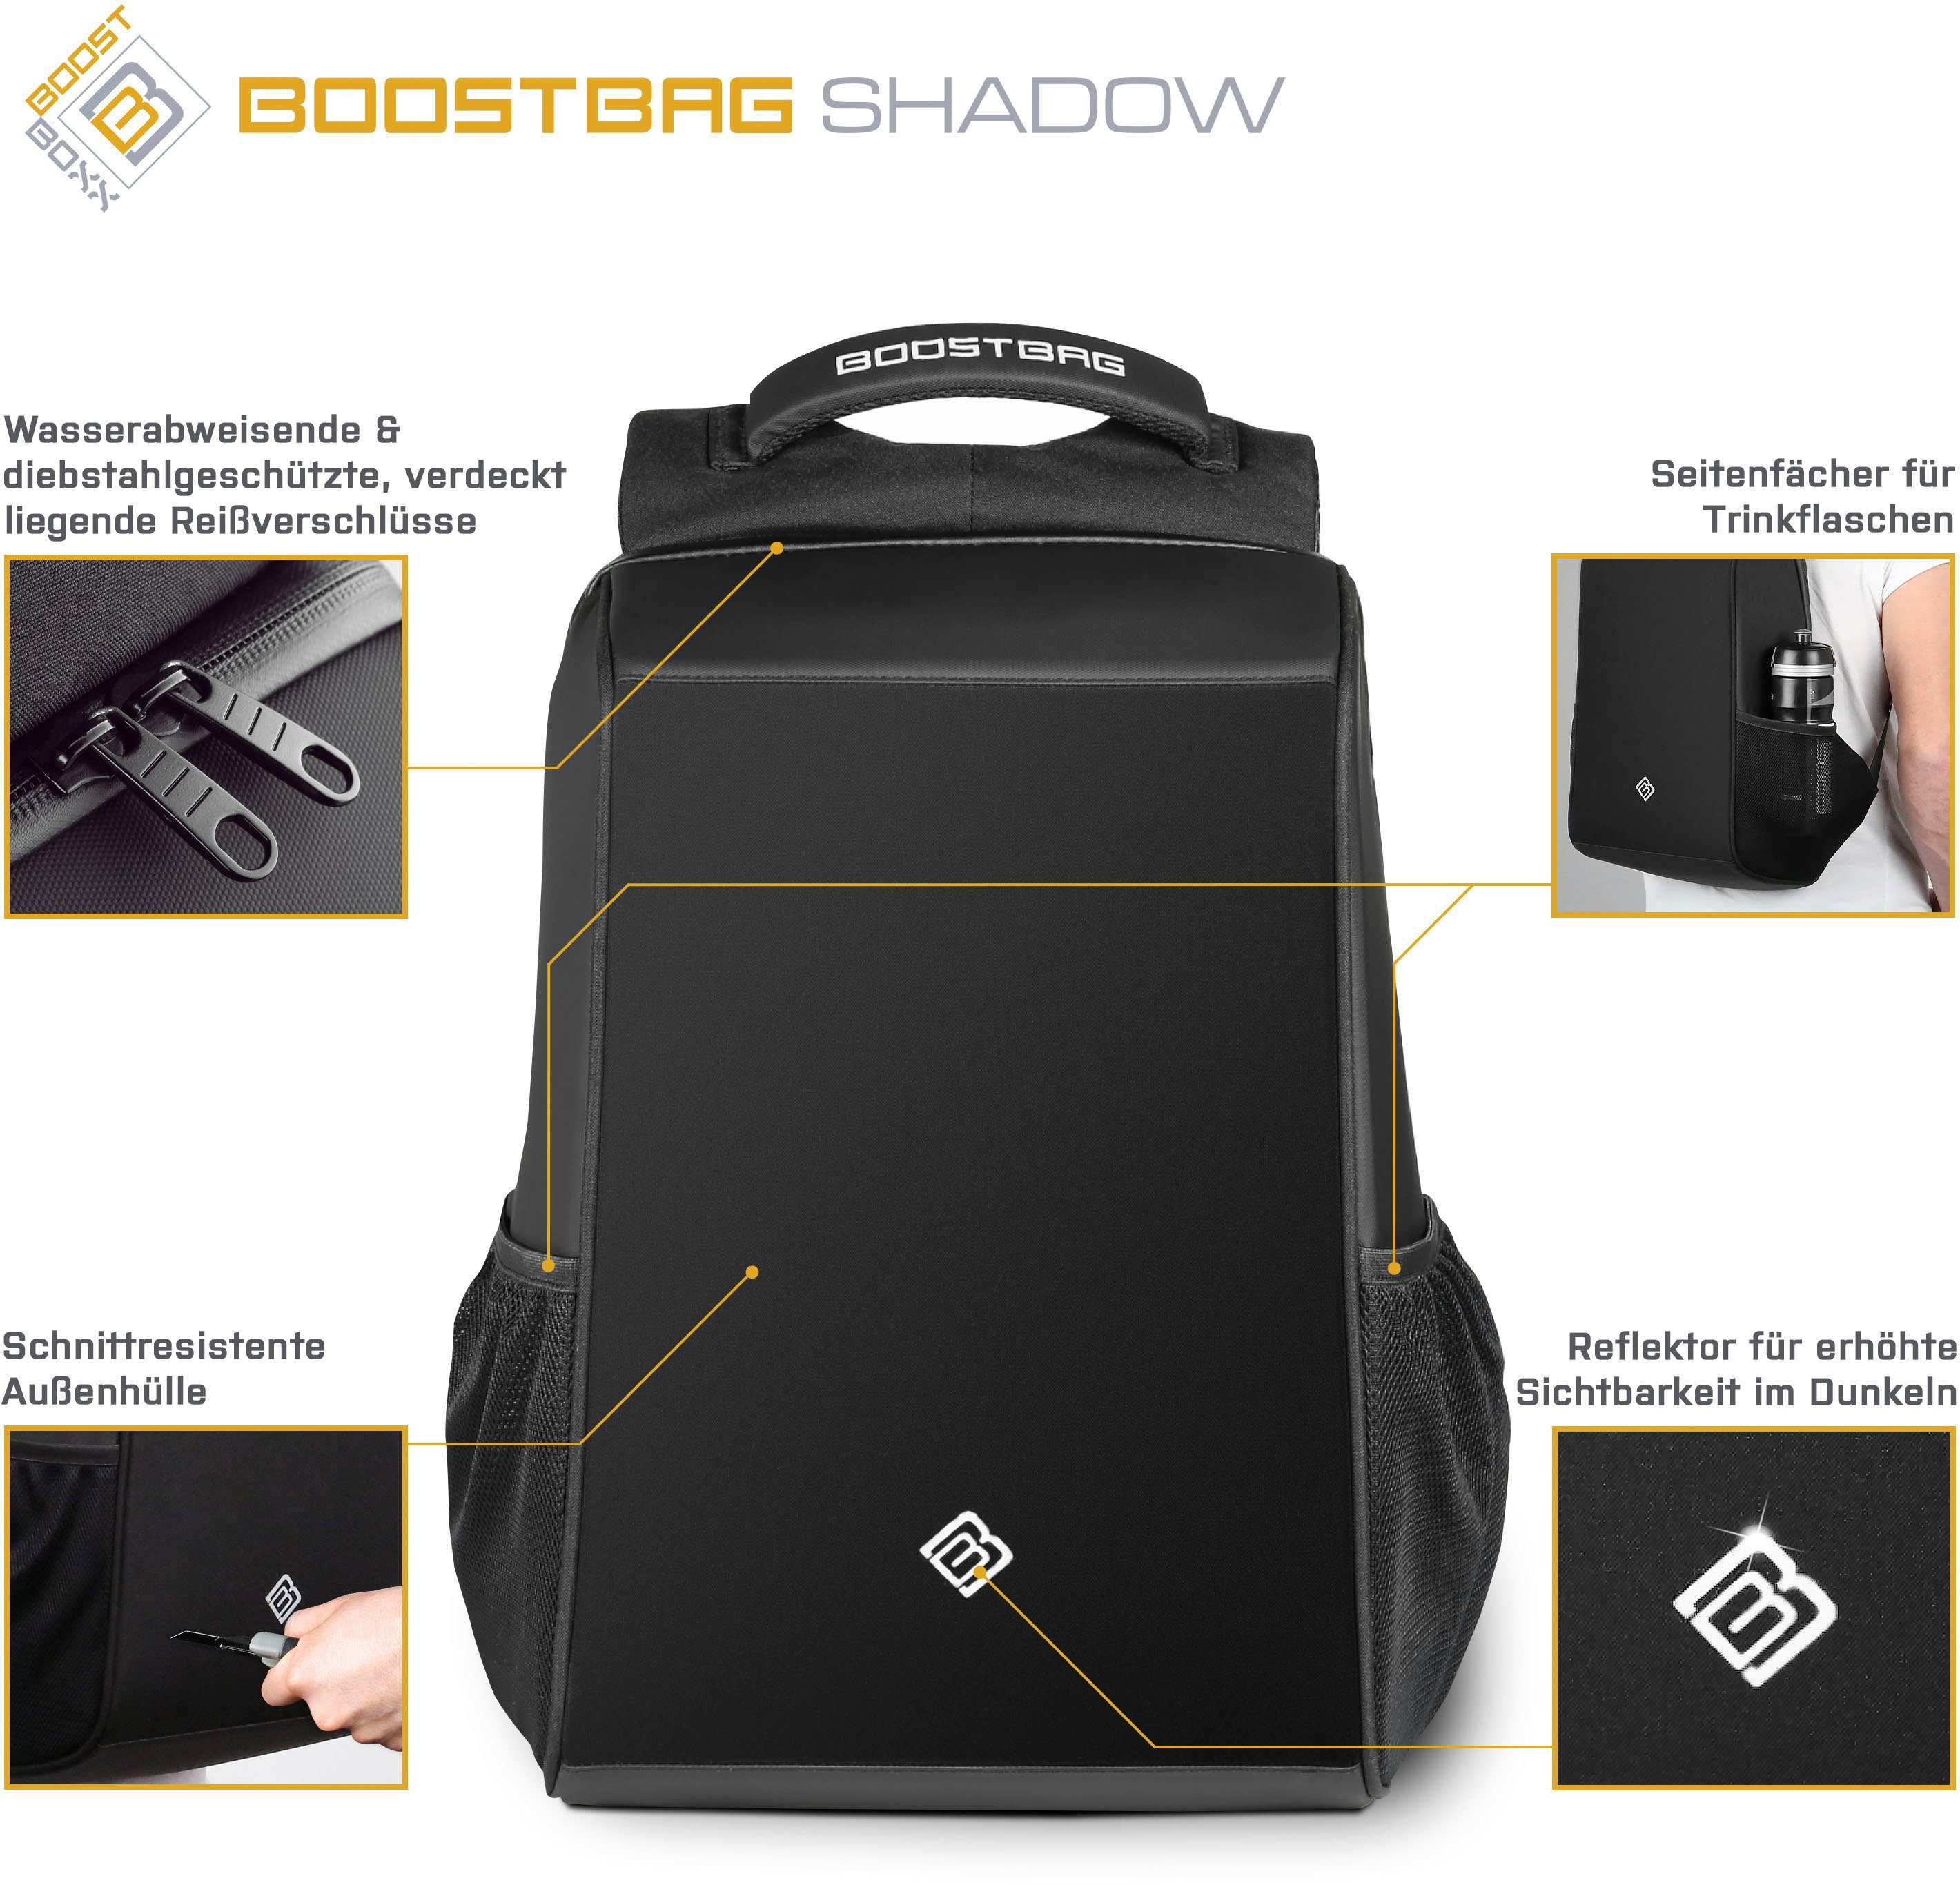 BoostBoxx Boostbag Shadow Notebookrucksack